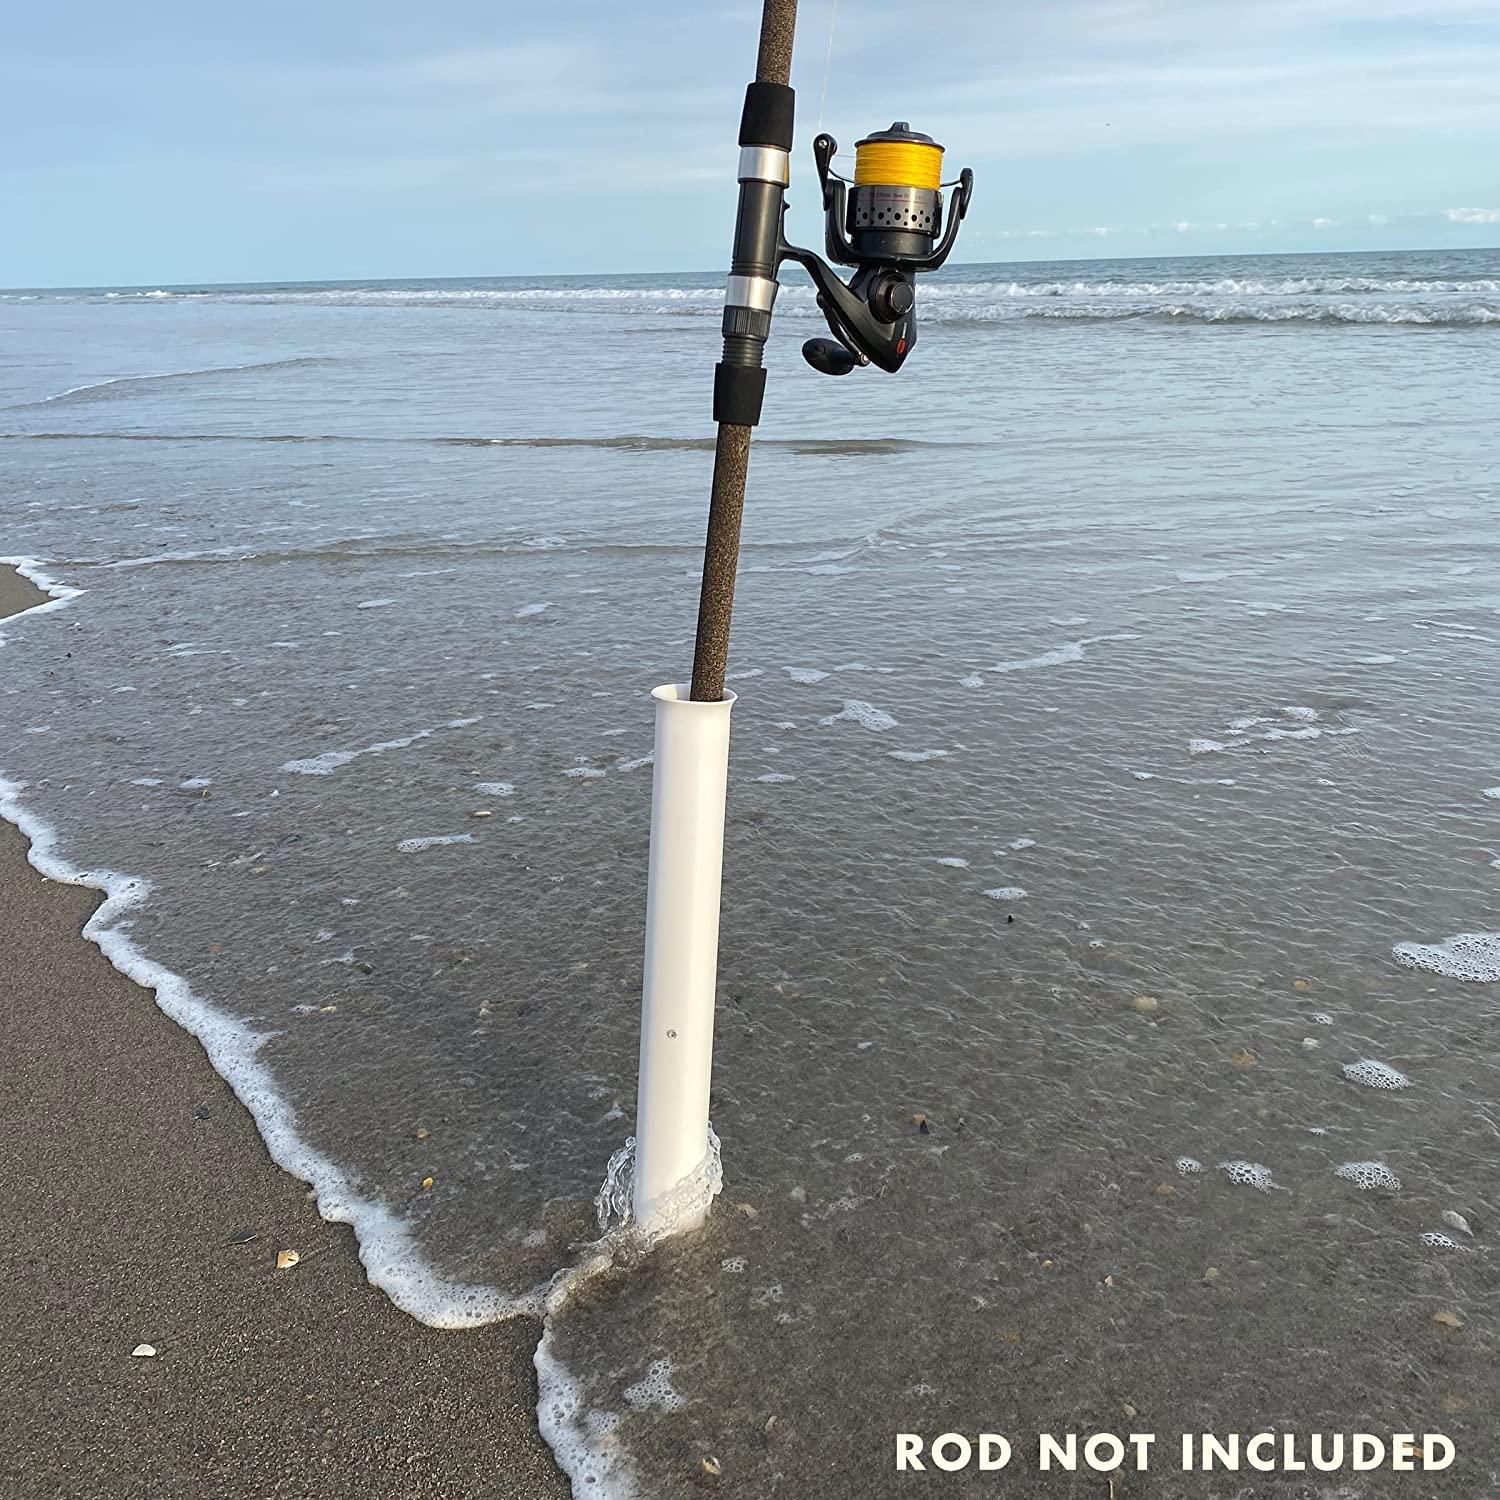 Best surf fishing rod holders: Beach sand spikes